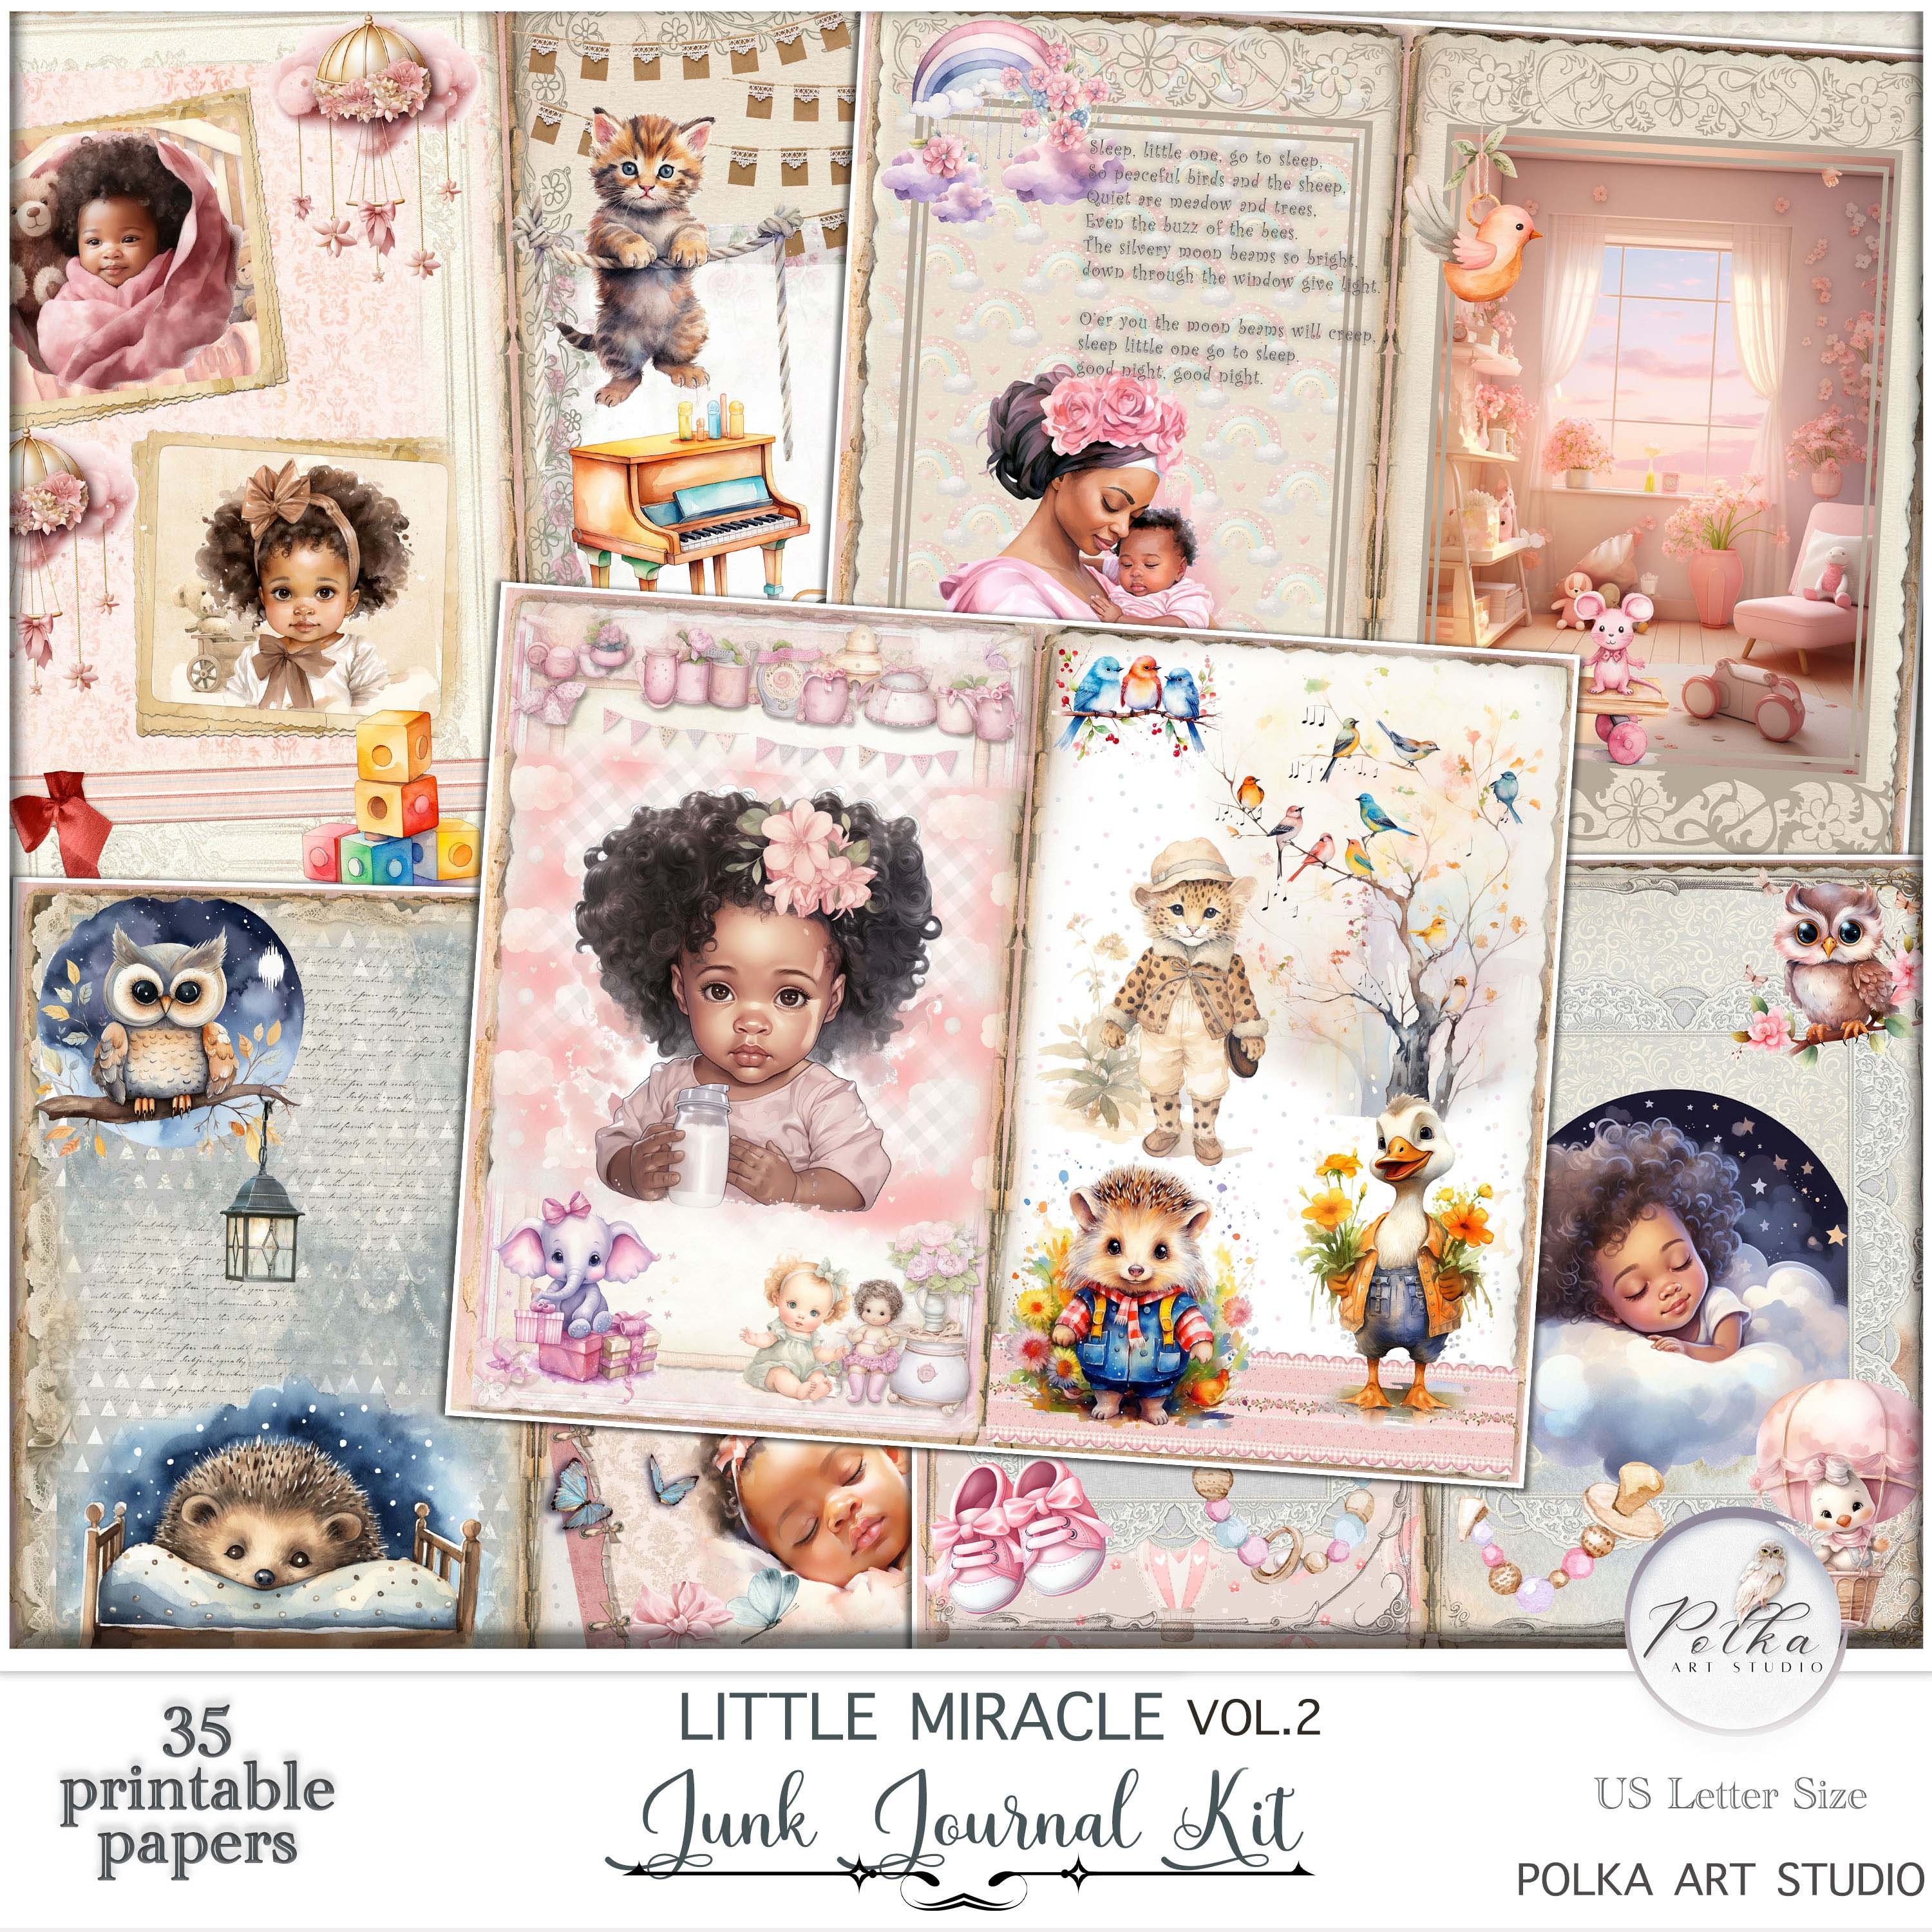 Ultimate Collage Scrapbook Kit - GirlZone US